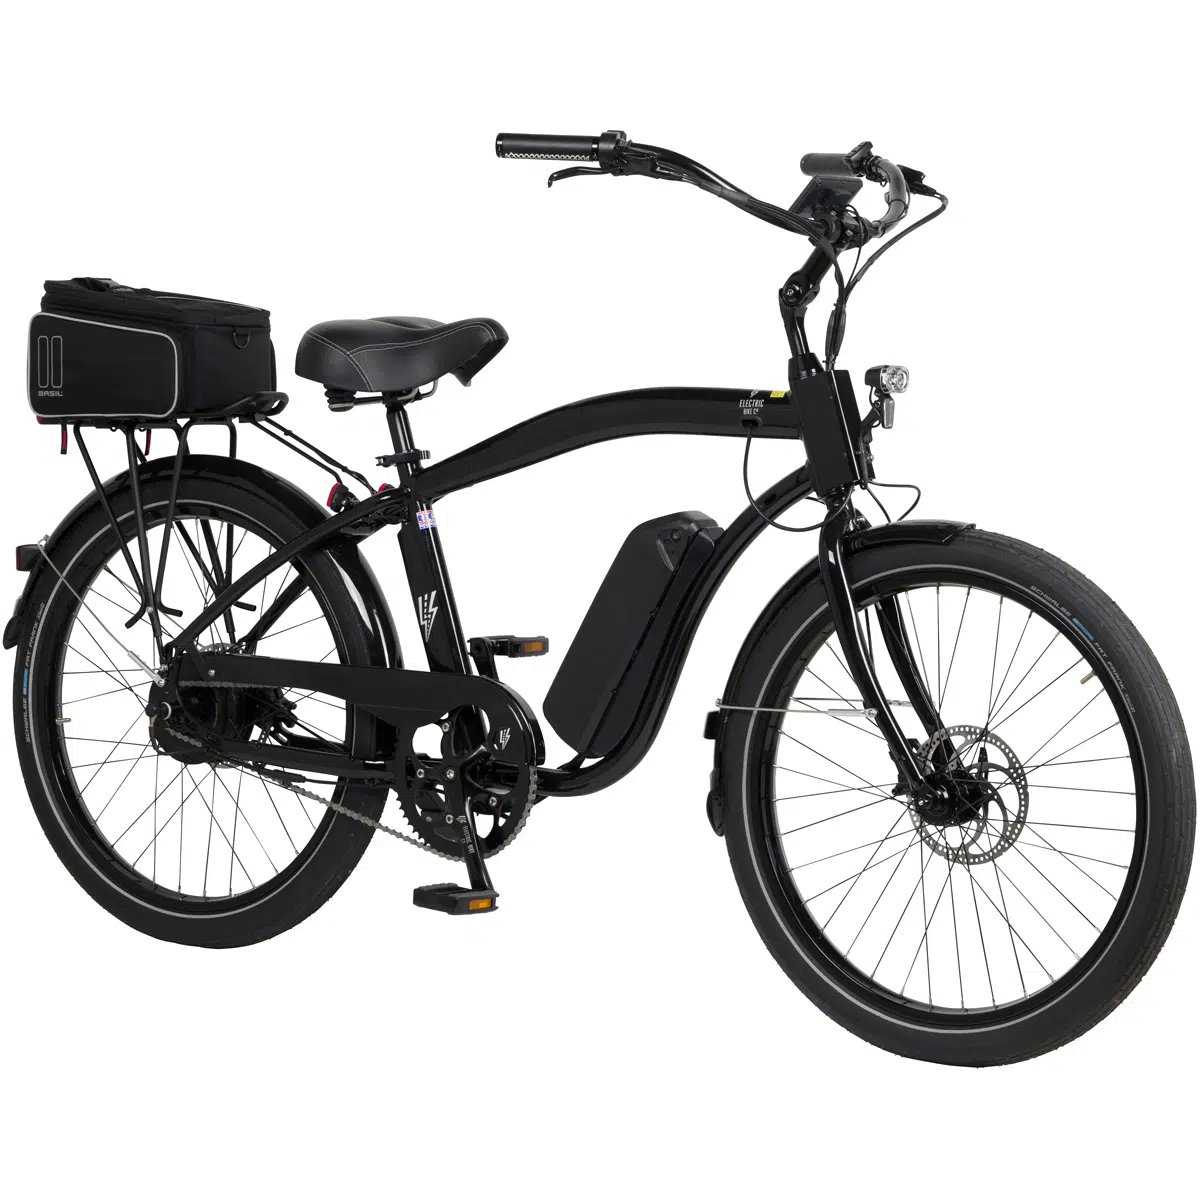 Electric-Bike-Company-Model-X-black-frontangle-trunkbag